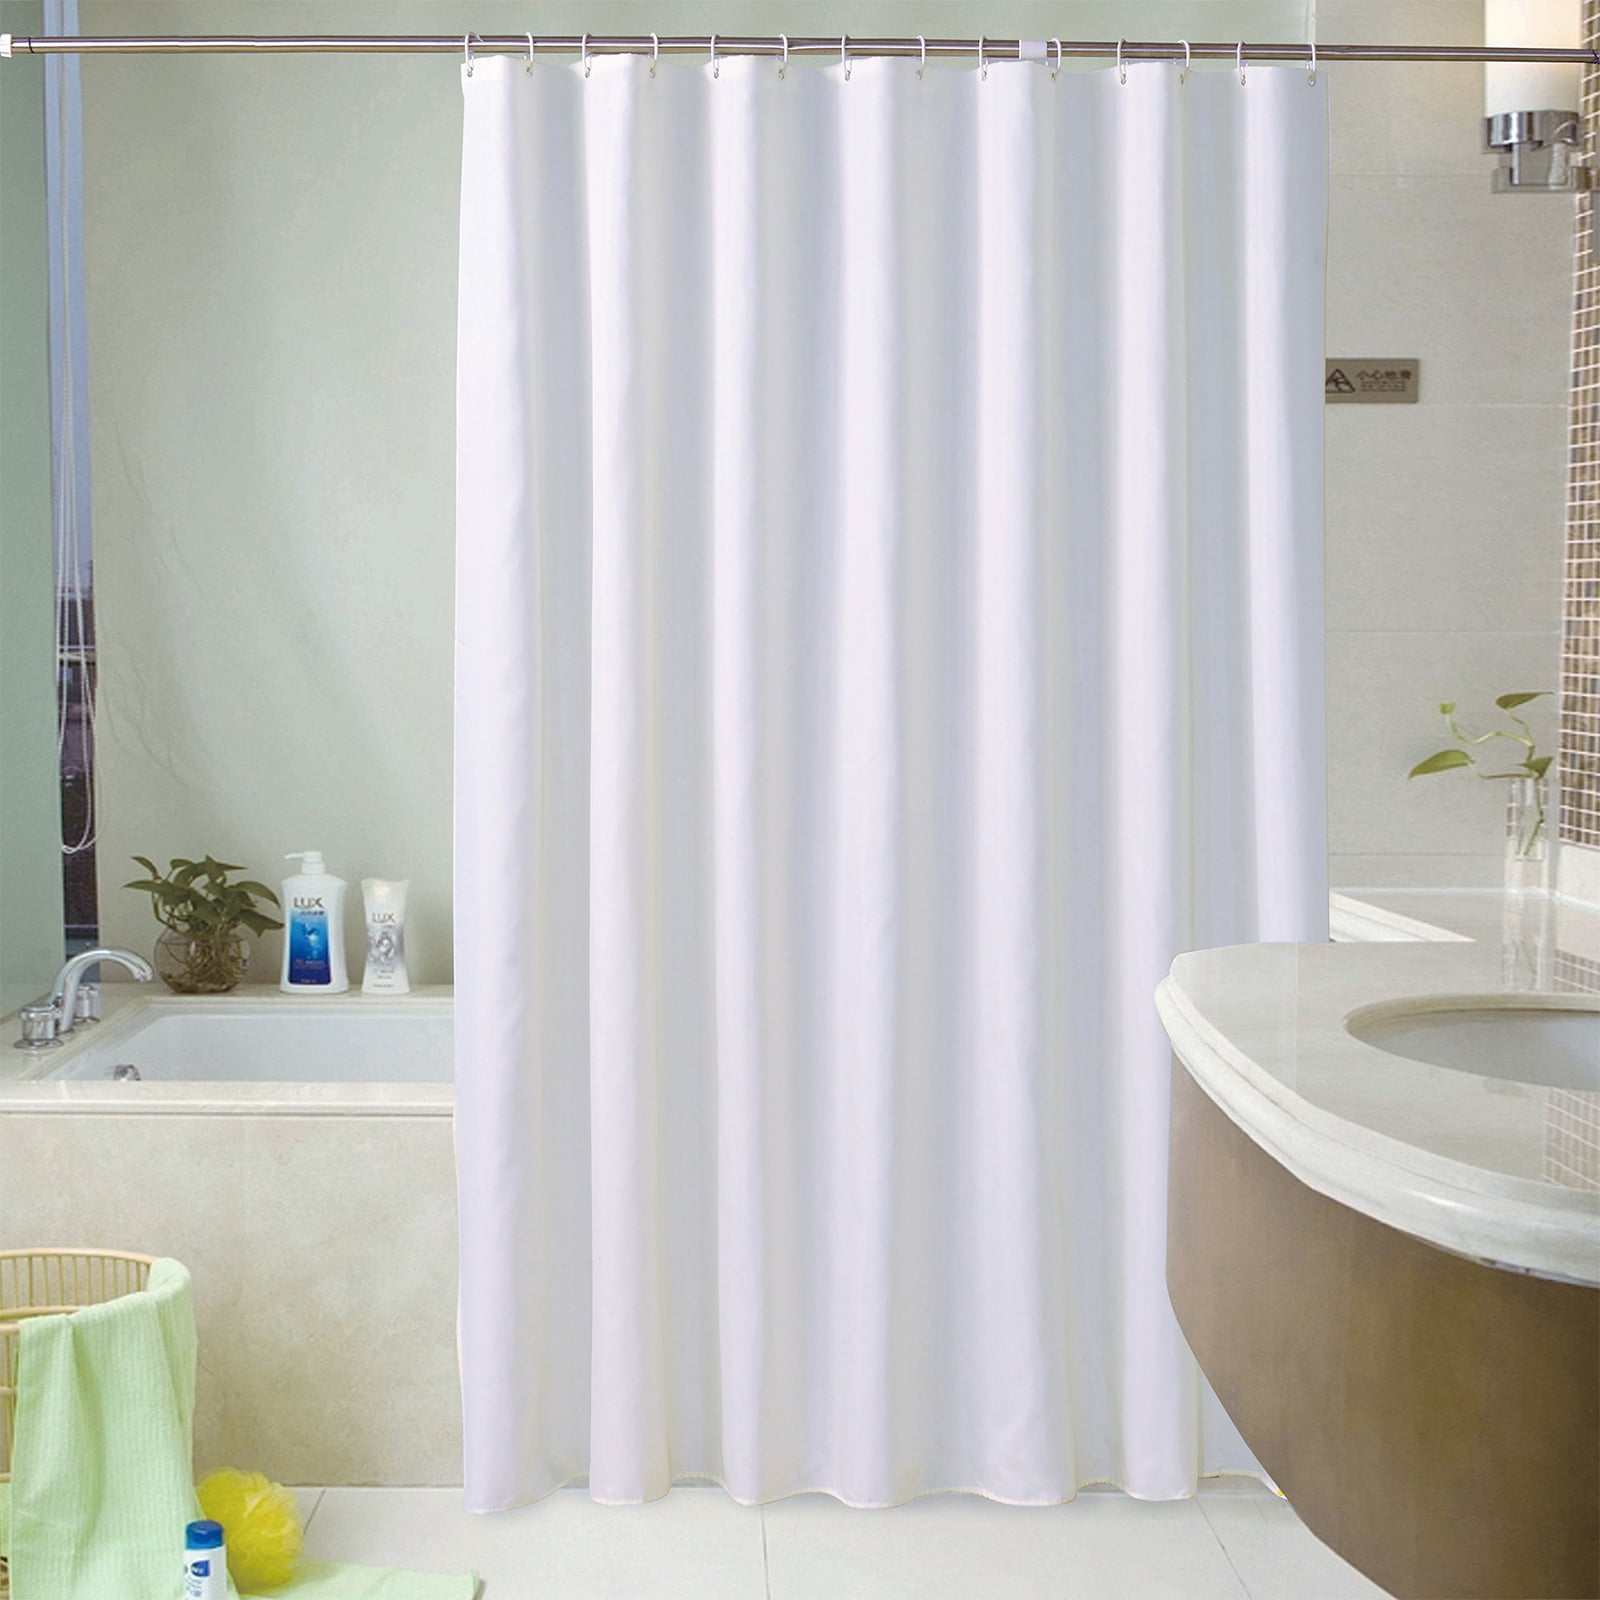 12 Hook Patterned PEVA Shower Curtain Bathroom Plain Splash Proof Hole Ring Set 